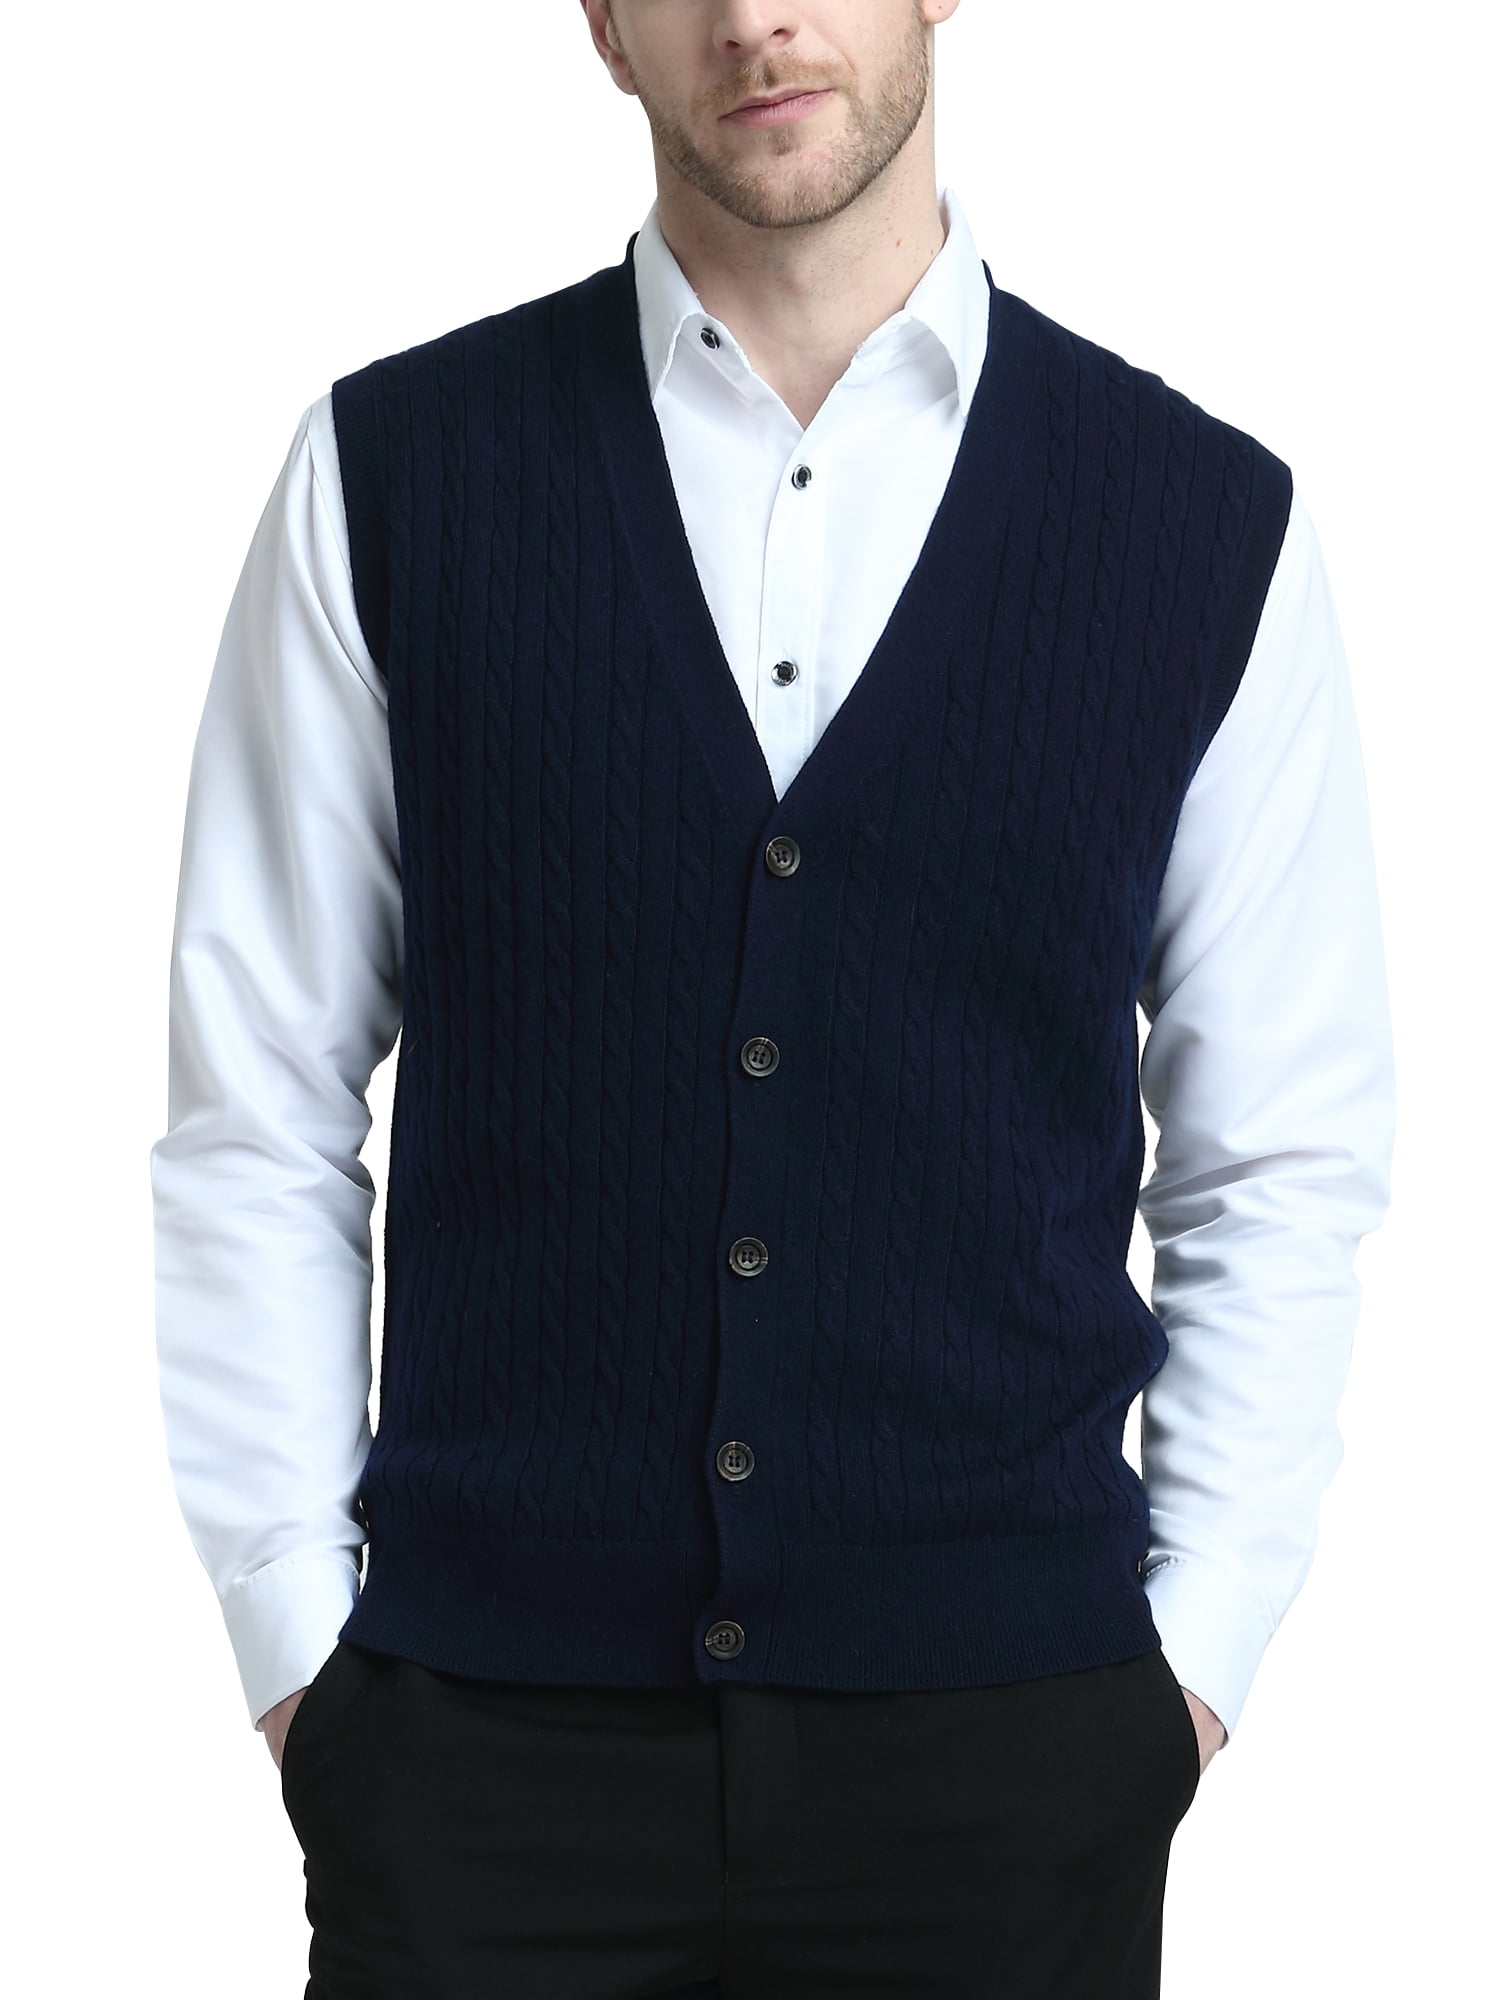 Kallspin Men's Wool Blend Cable-Knit V Neck Sleeveless Cardigan Vest ...